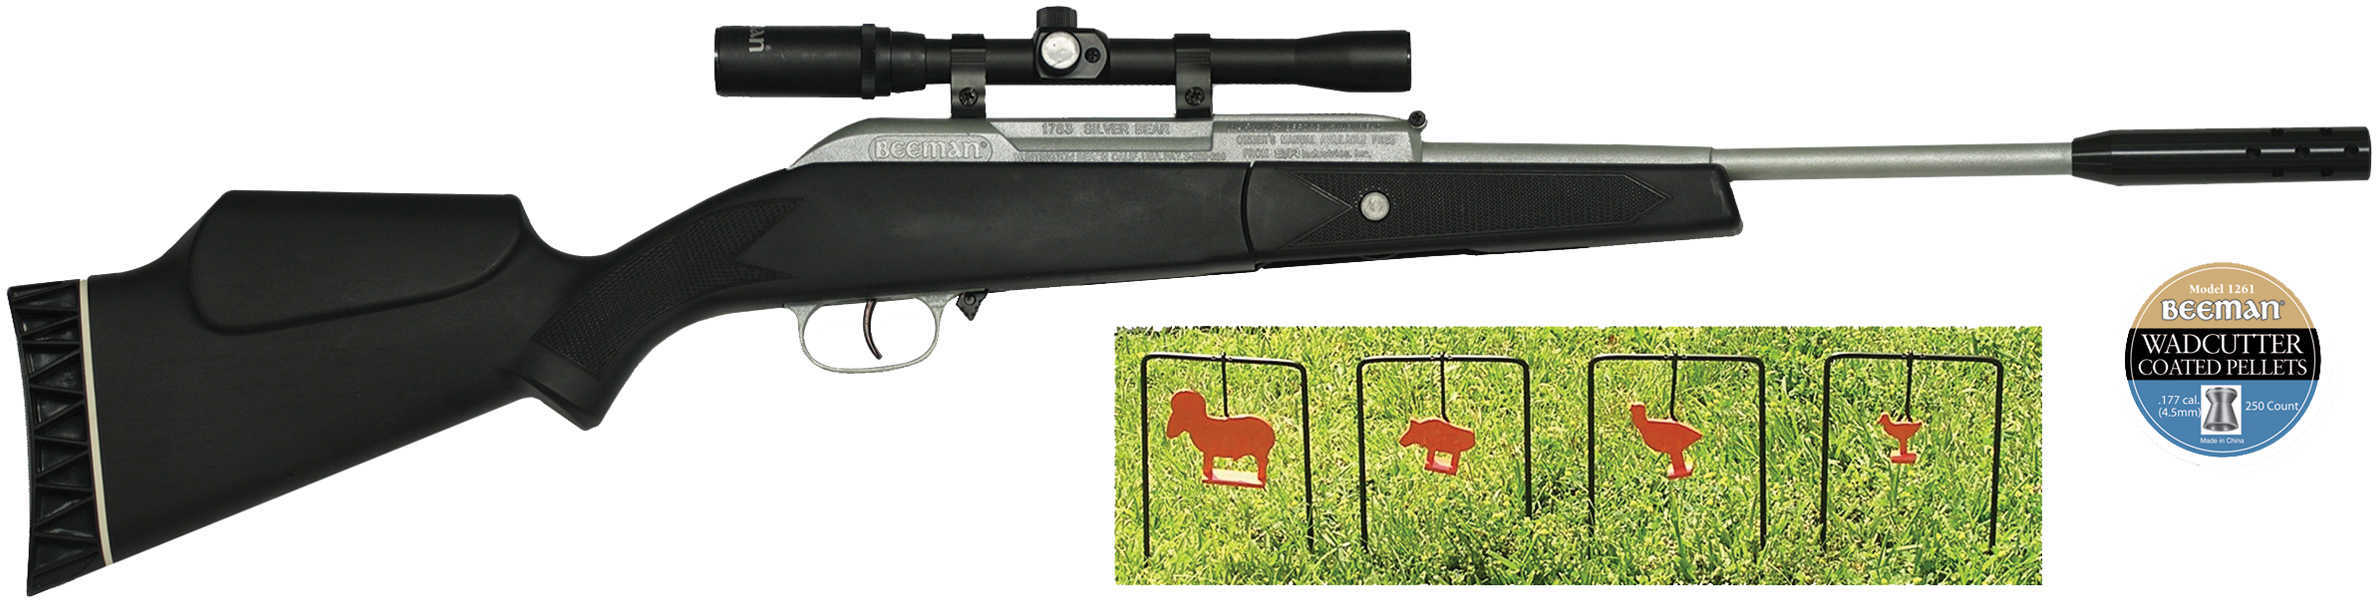 Beeman Ranger Shooter's Kit with Targets/Ammo 1026